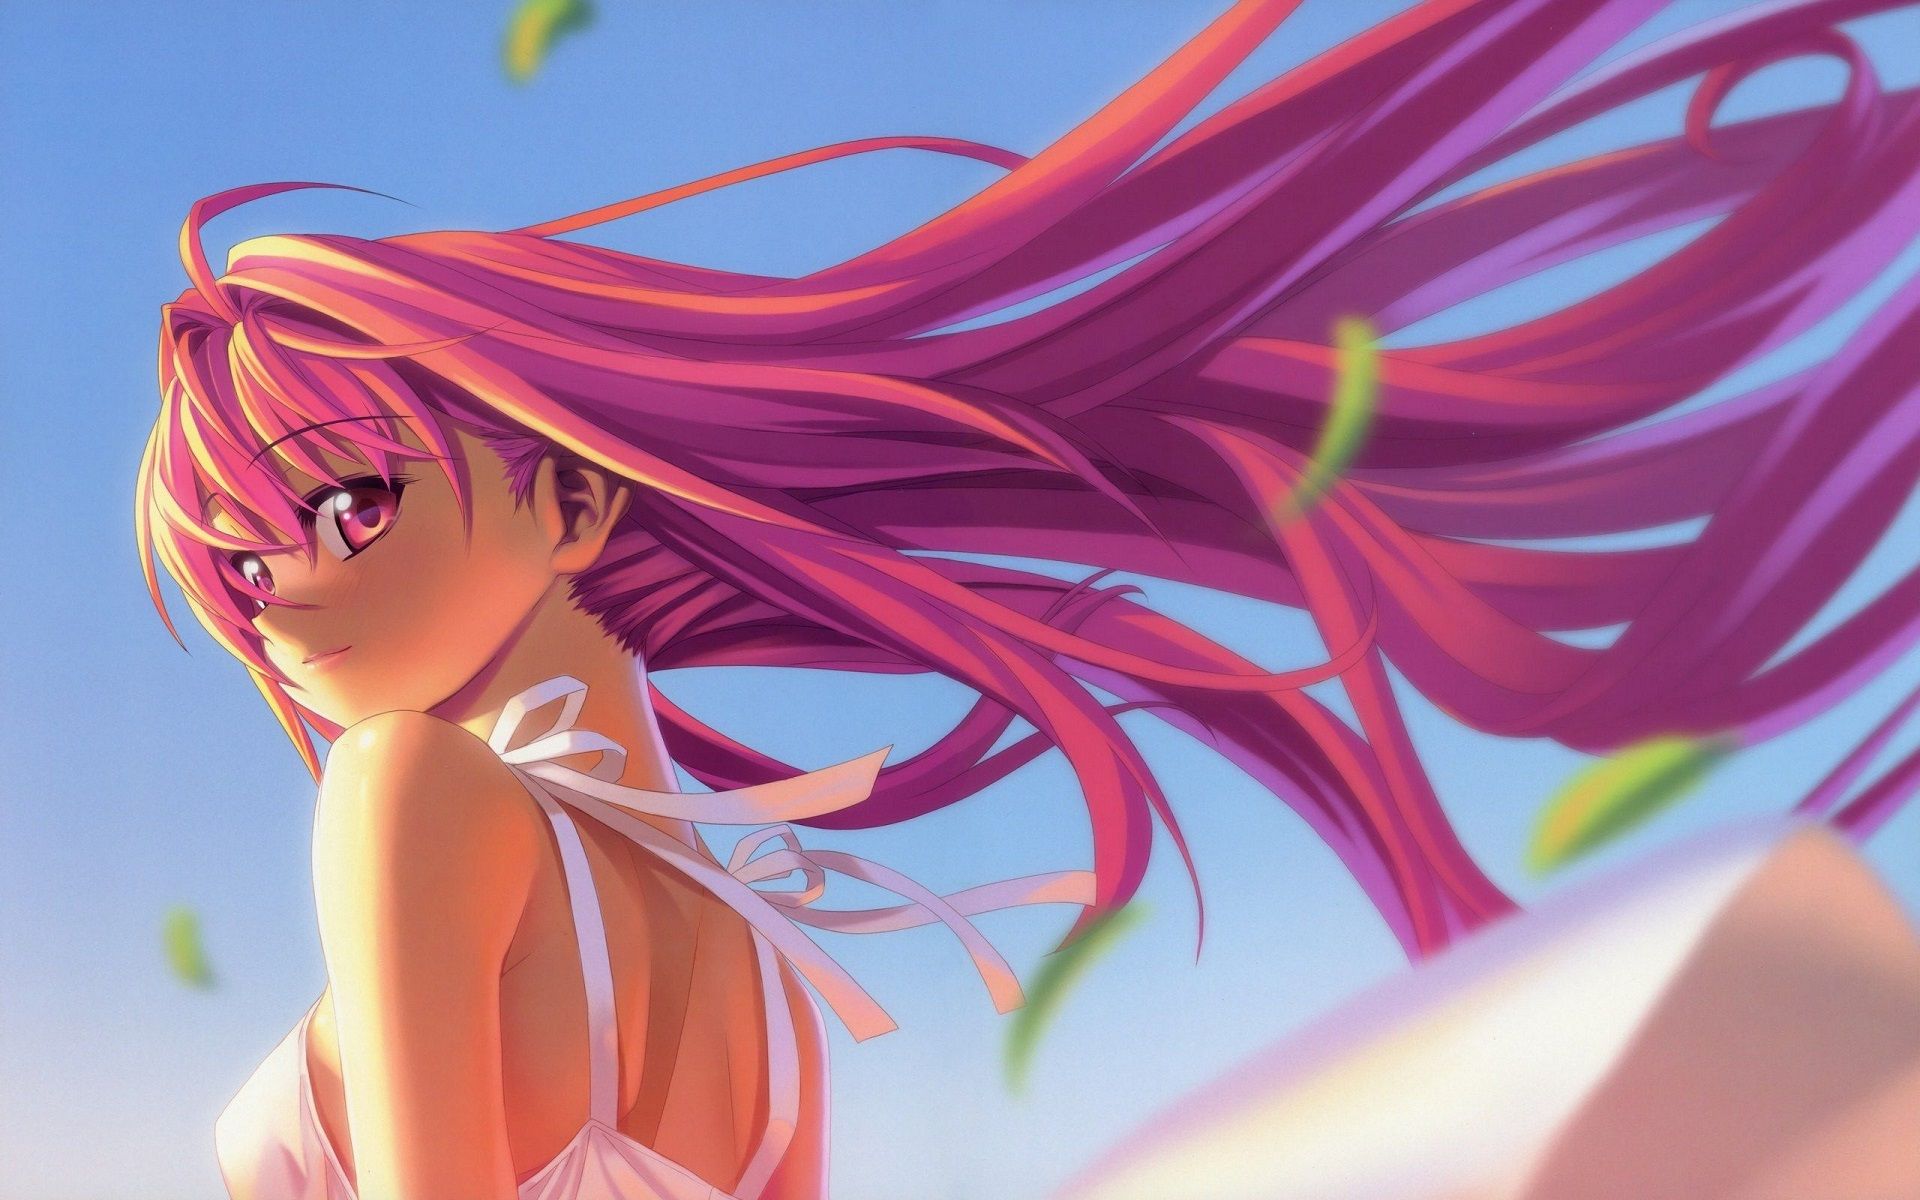 Anime Girl Pink Hairs In Air, HD Anime, 4k Wallpaper, Image